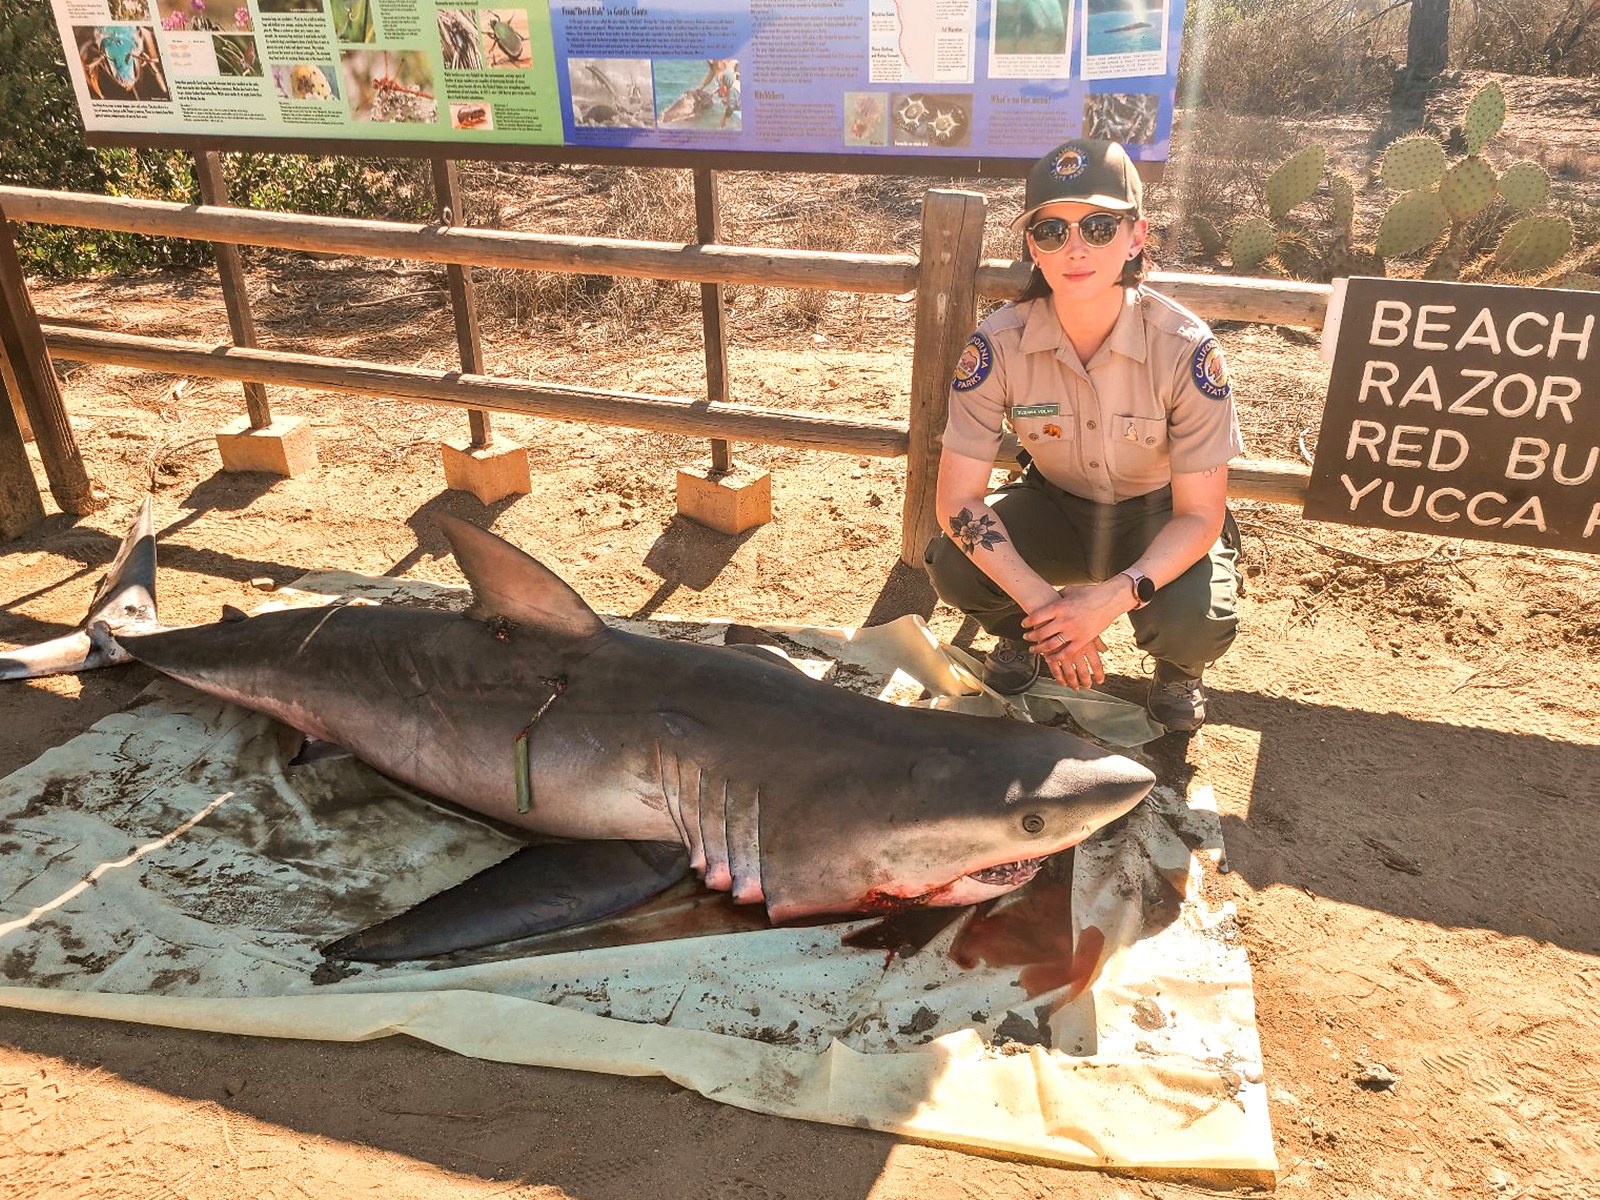 Dead Great White Shark on California Beach Was Killed by Fishing Gear